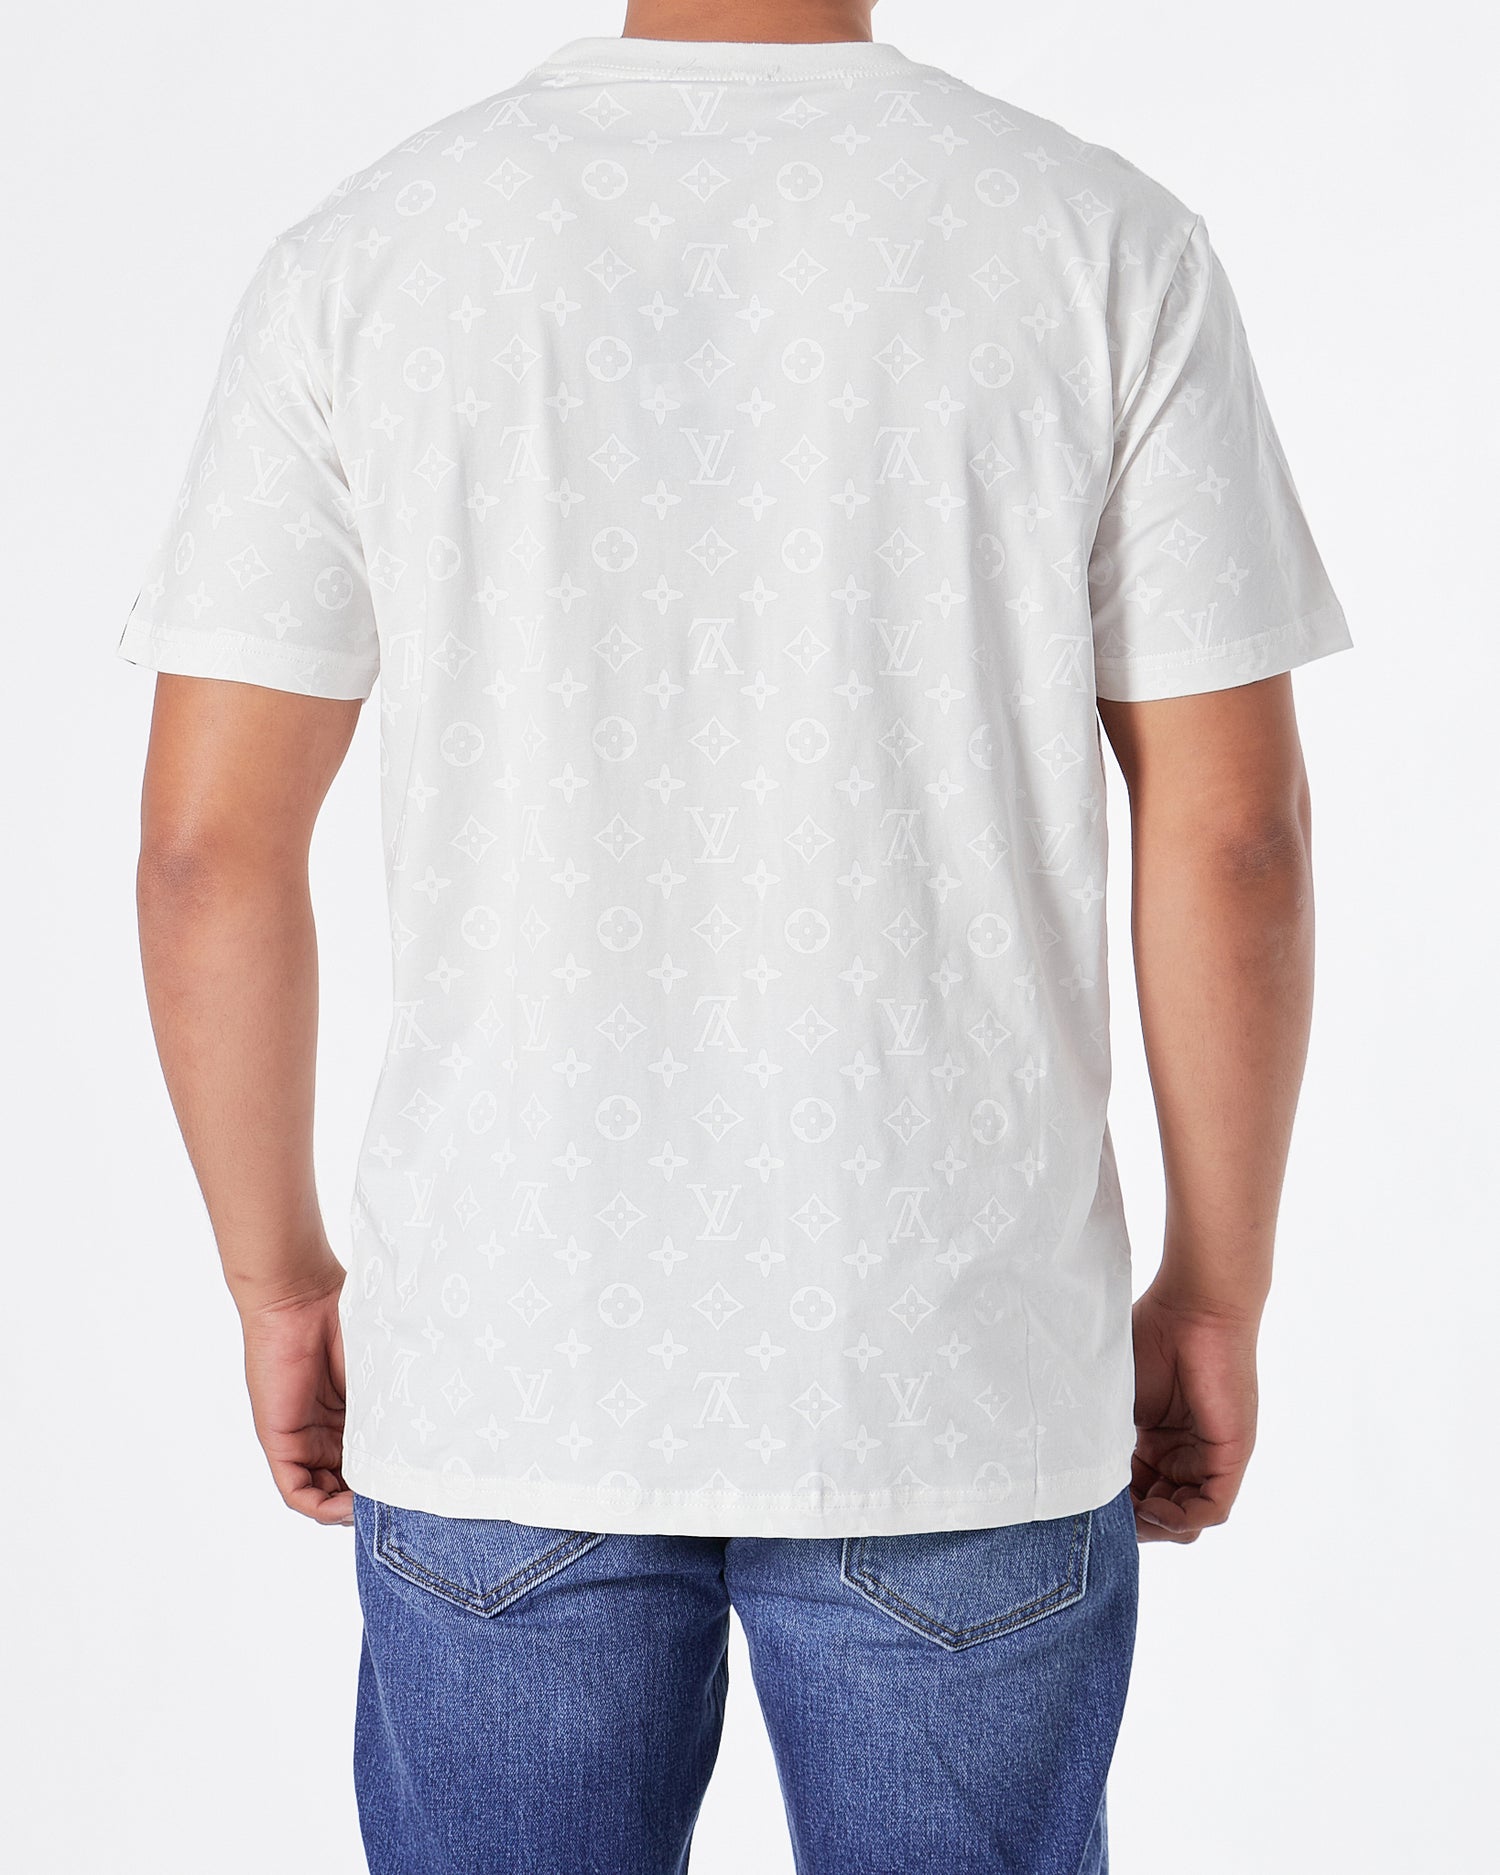 Louis Vuitton LV short sleeve crew neck plane print tshirts tee shirts  women's men's t-shirts white